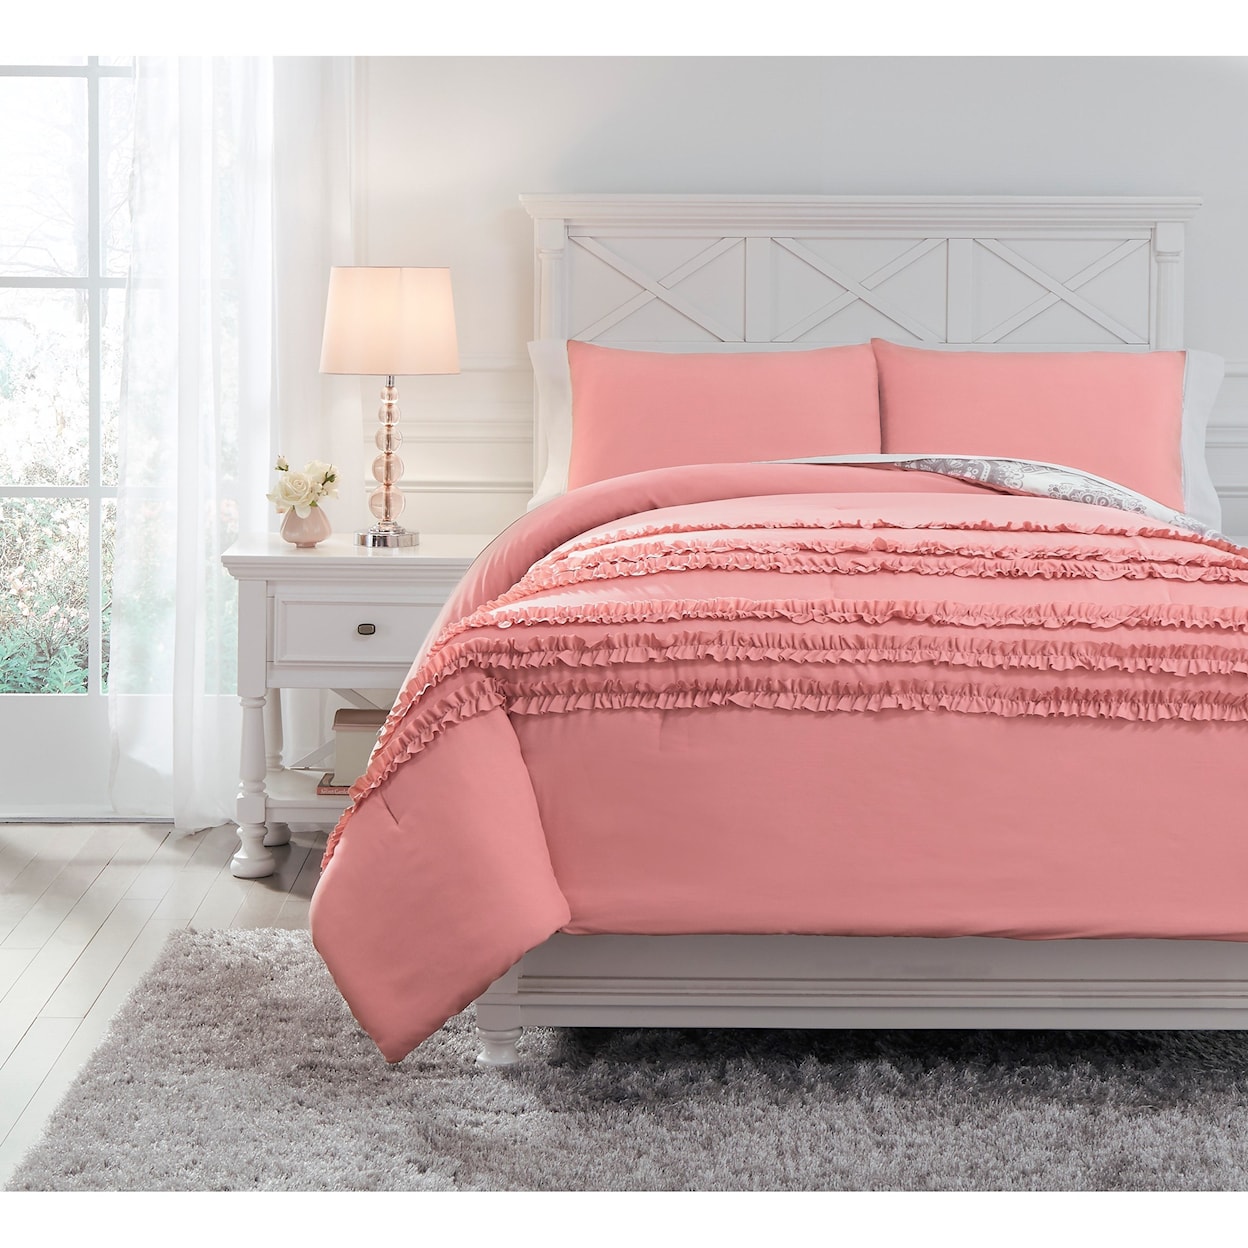 Ashley Furniture Signature Design Bedding Sets Full Avaleigh Pink/White/Gray Comforter Set